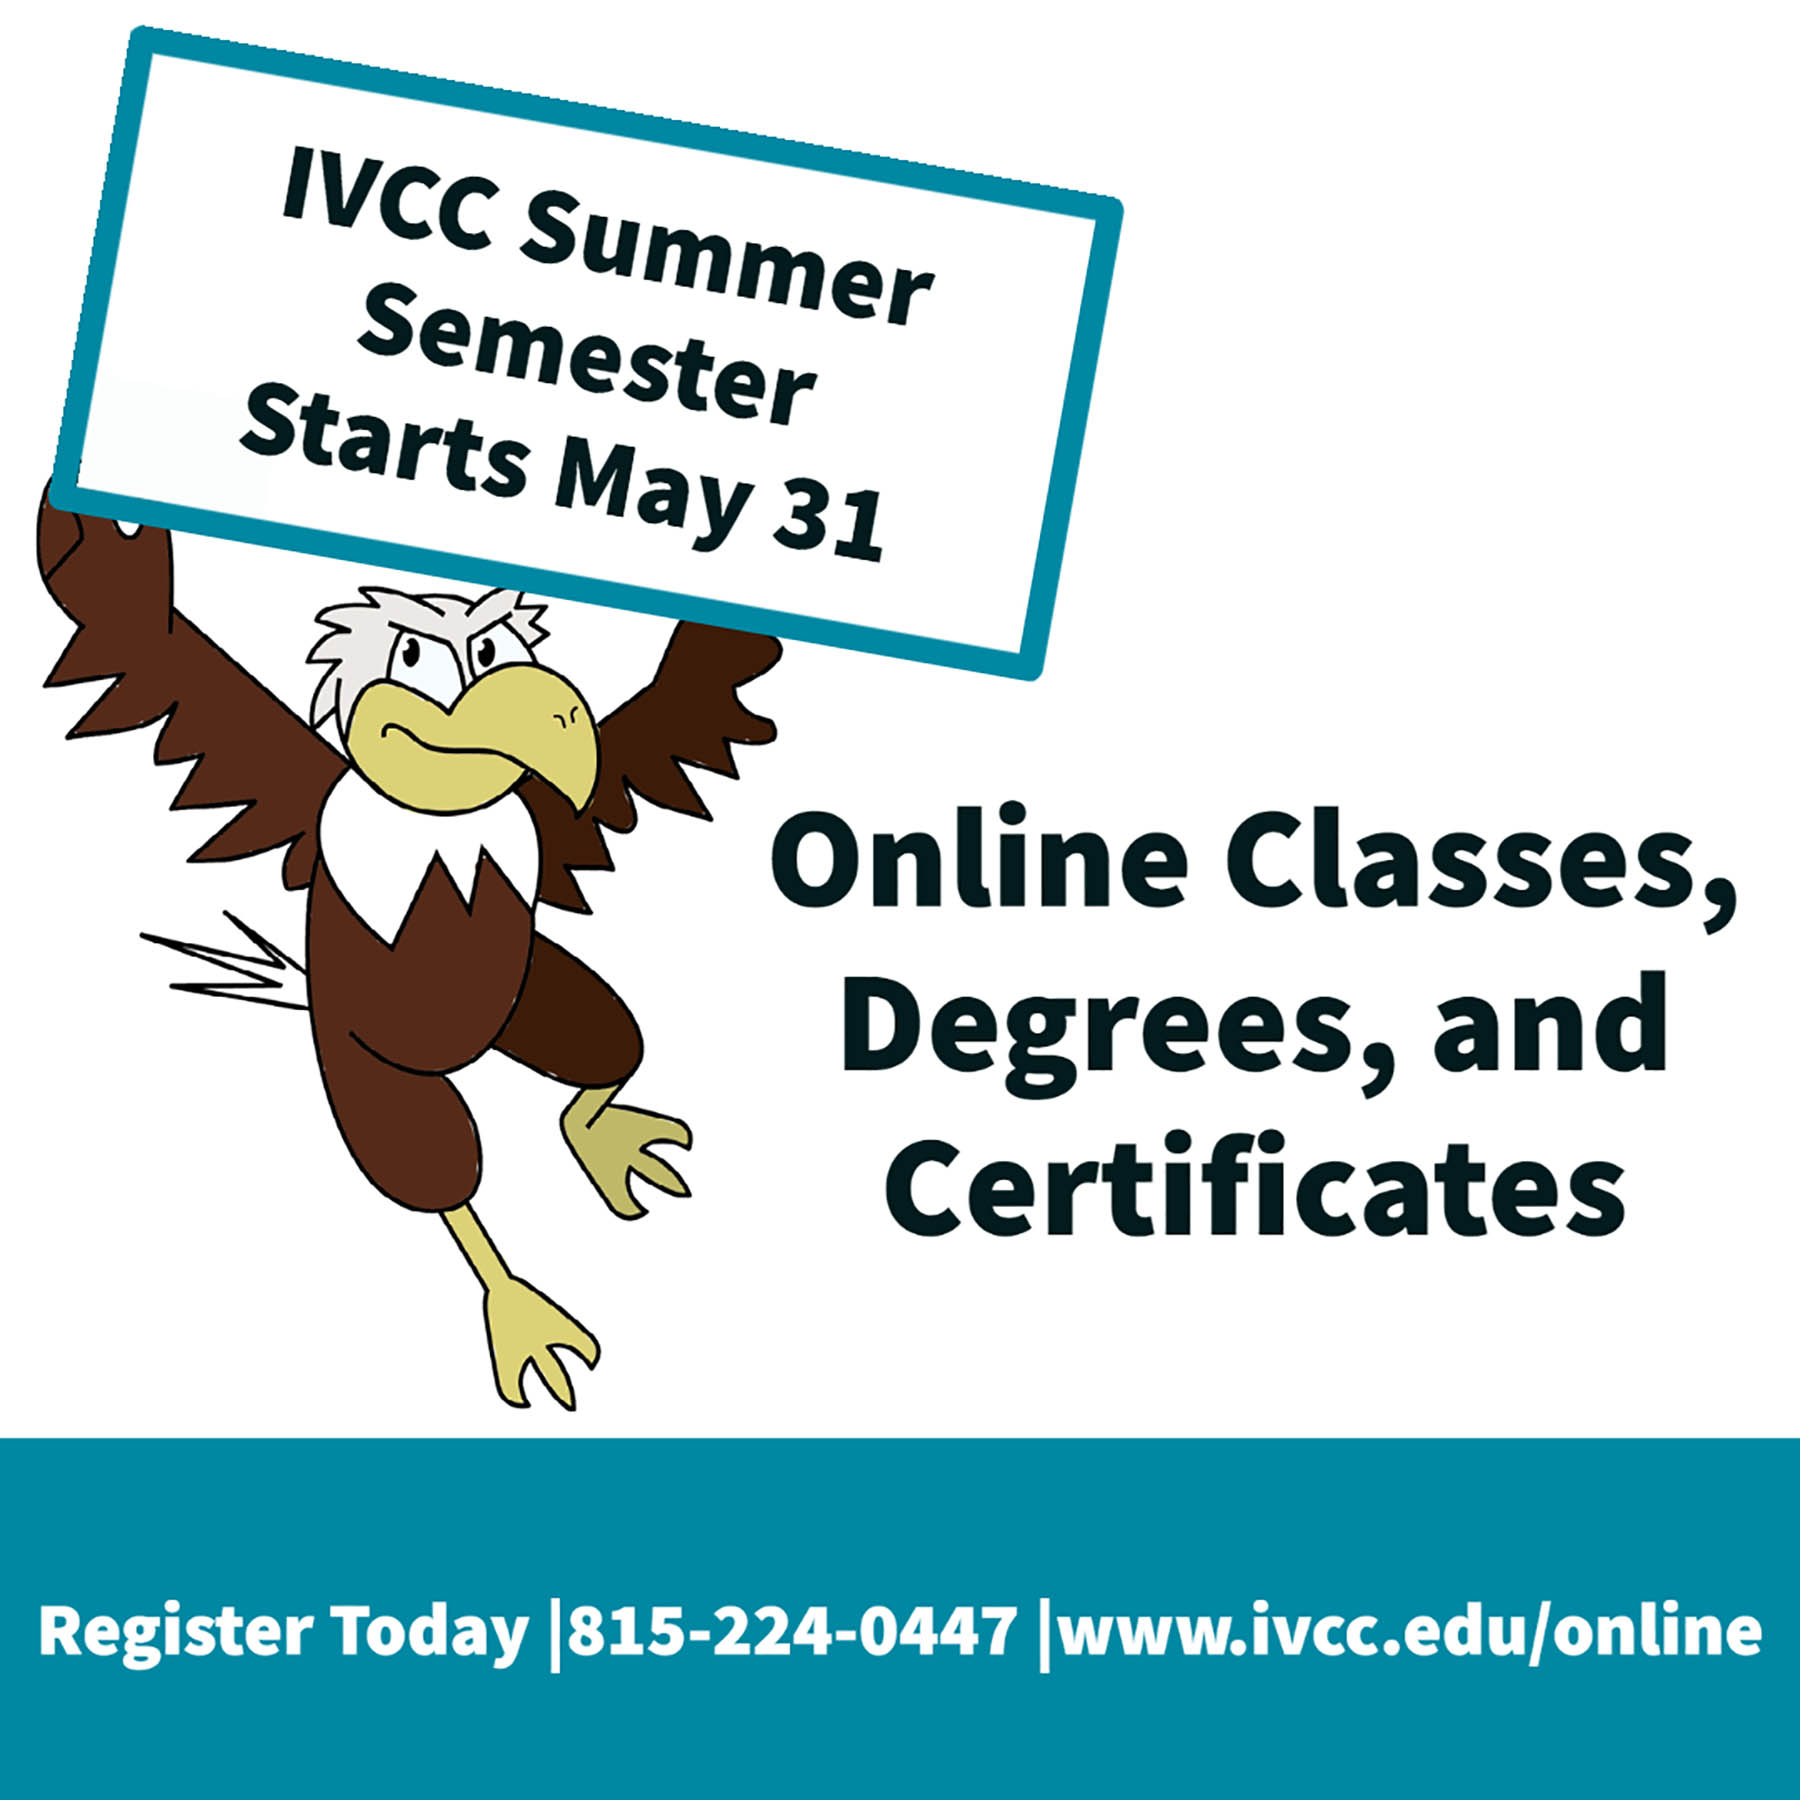 IVCC Summer Online Classes Start May 31